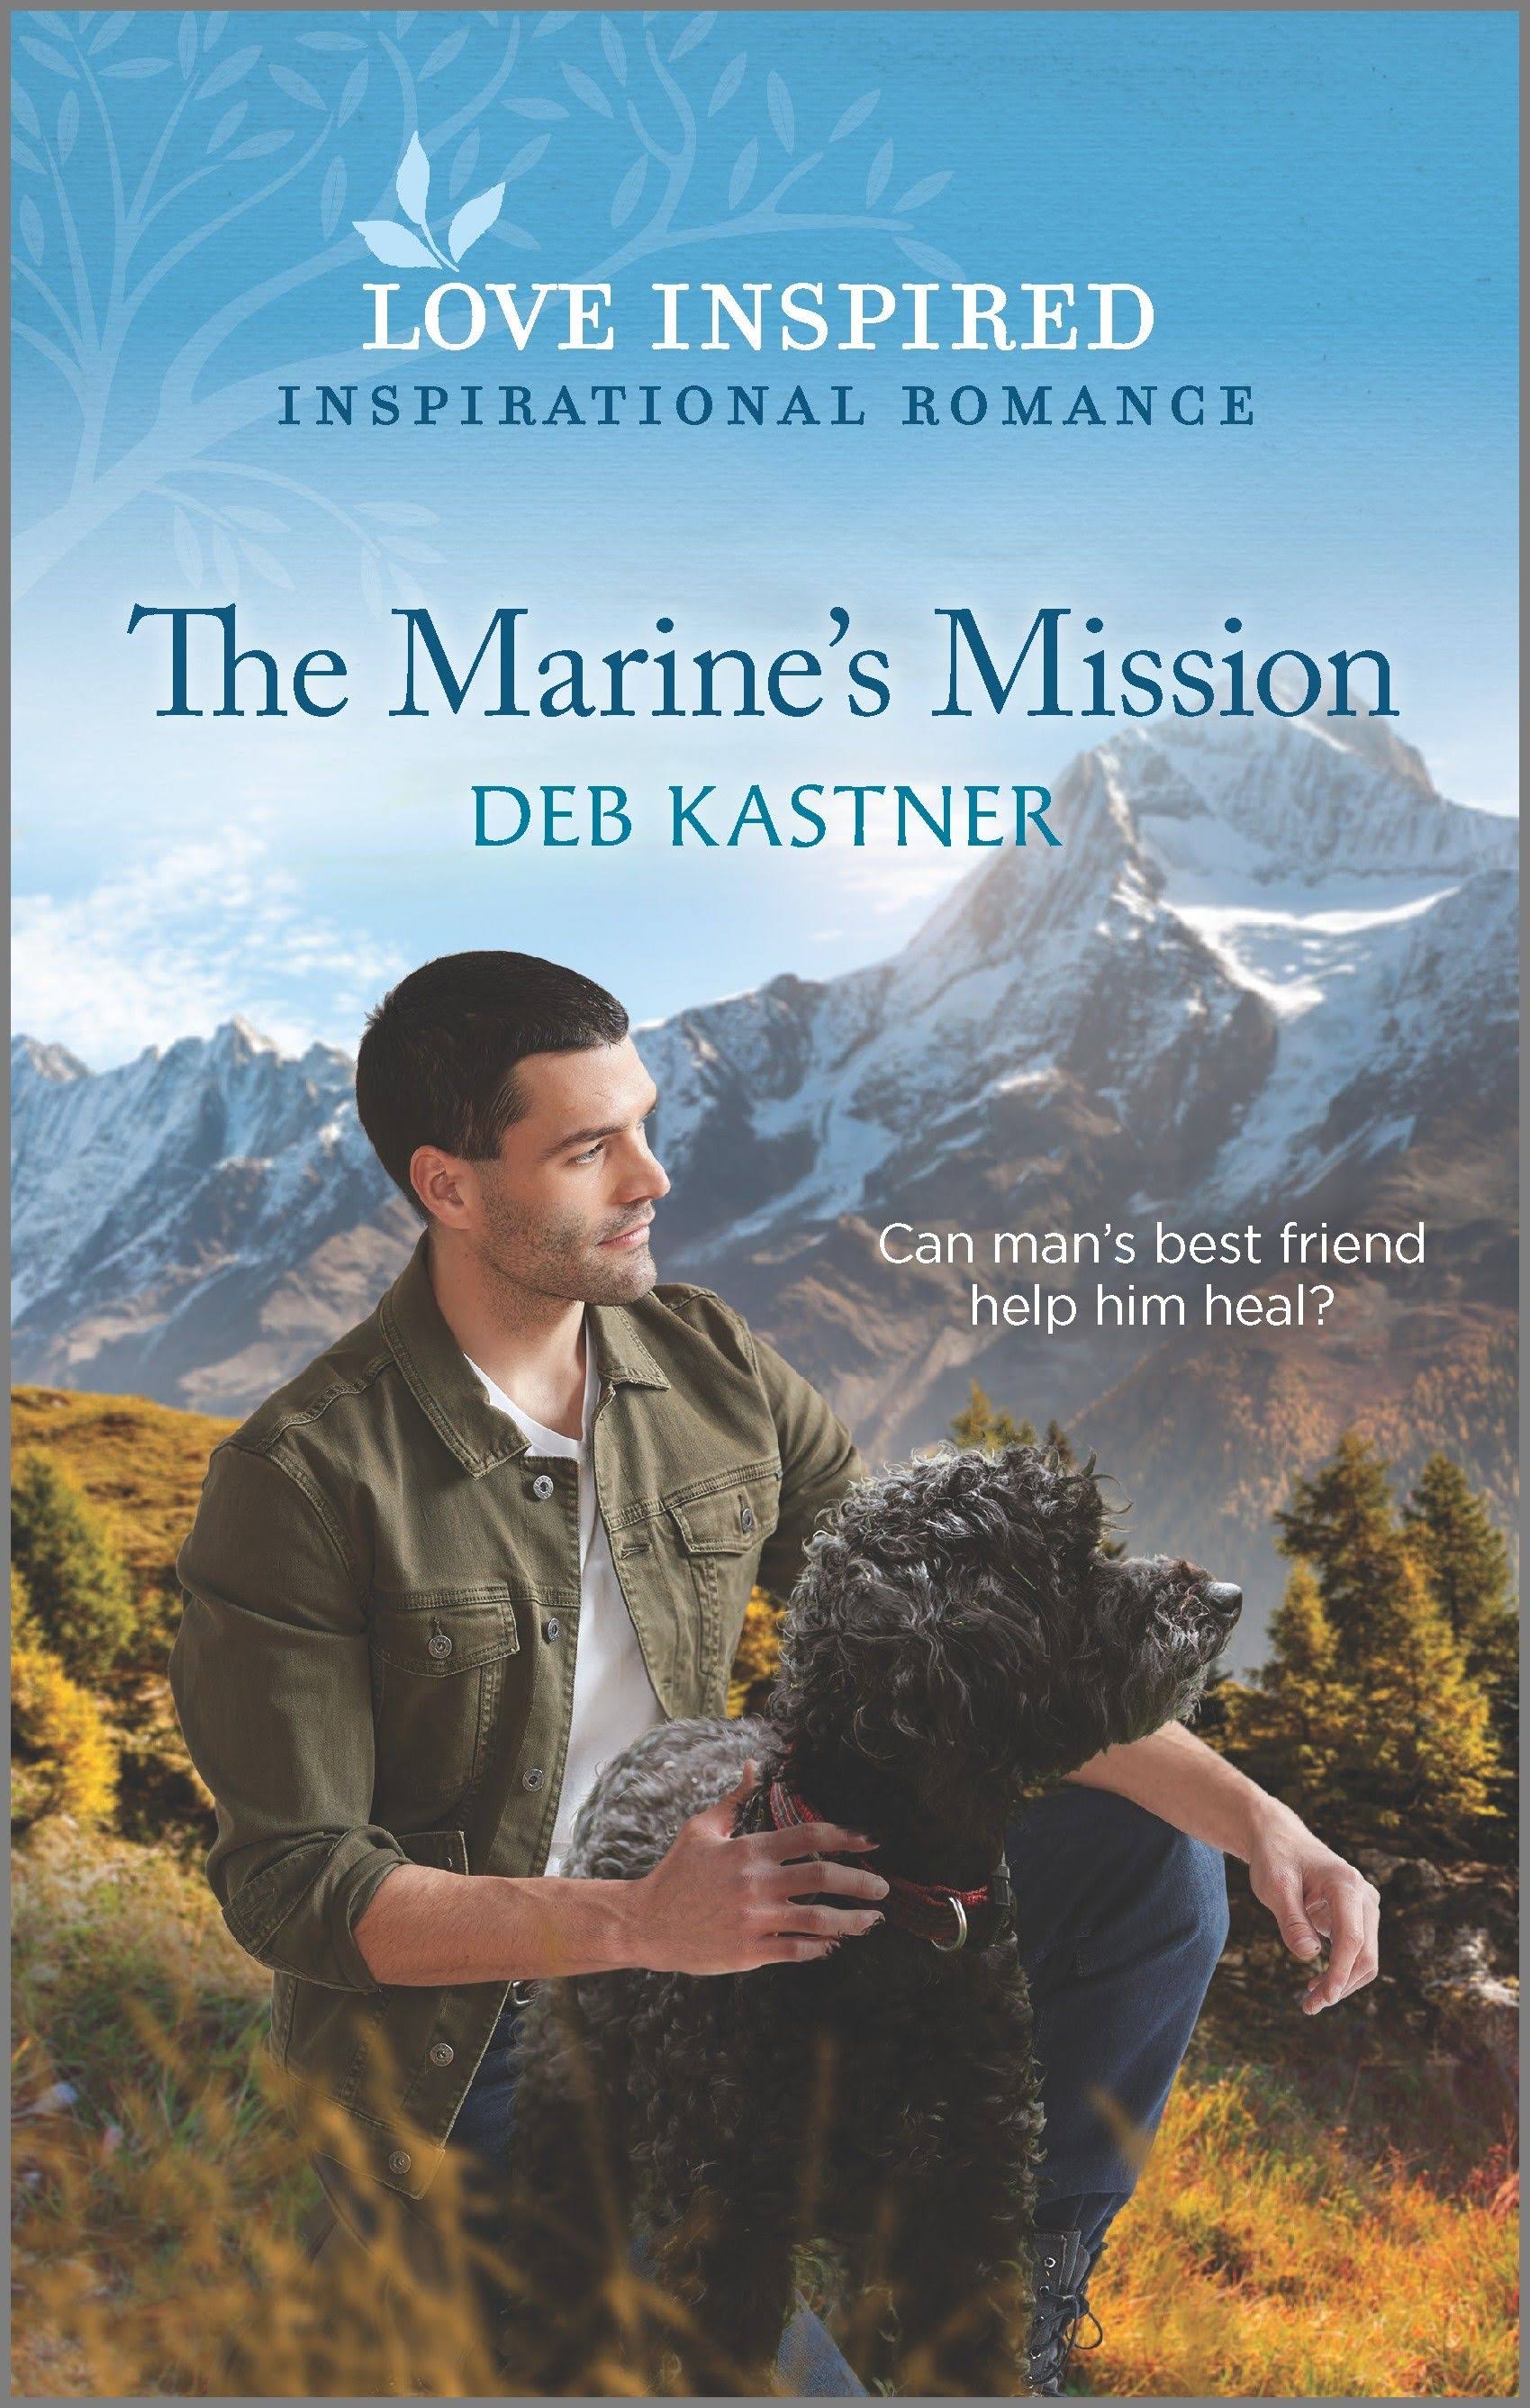 The Marine's Mission by Deb Kastner